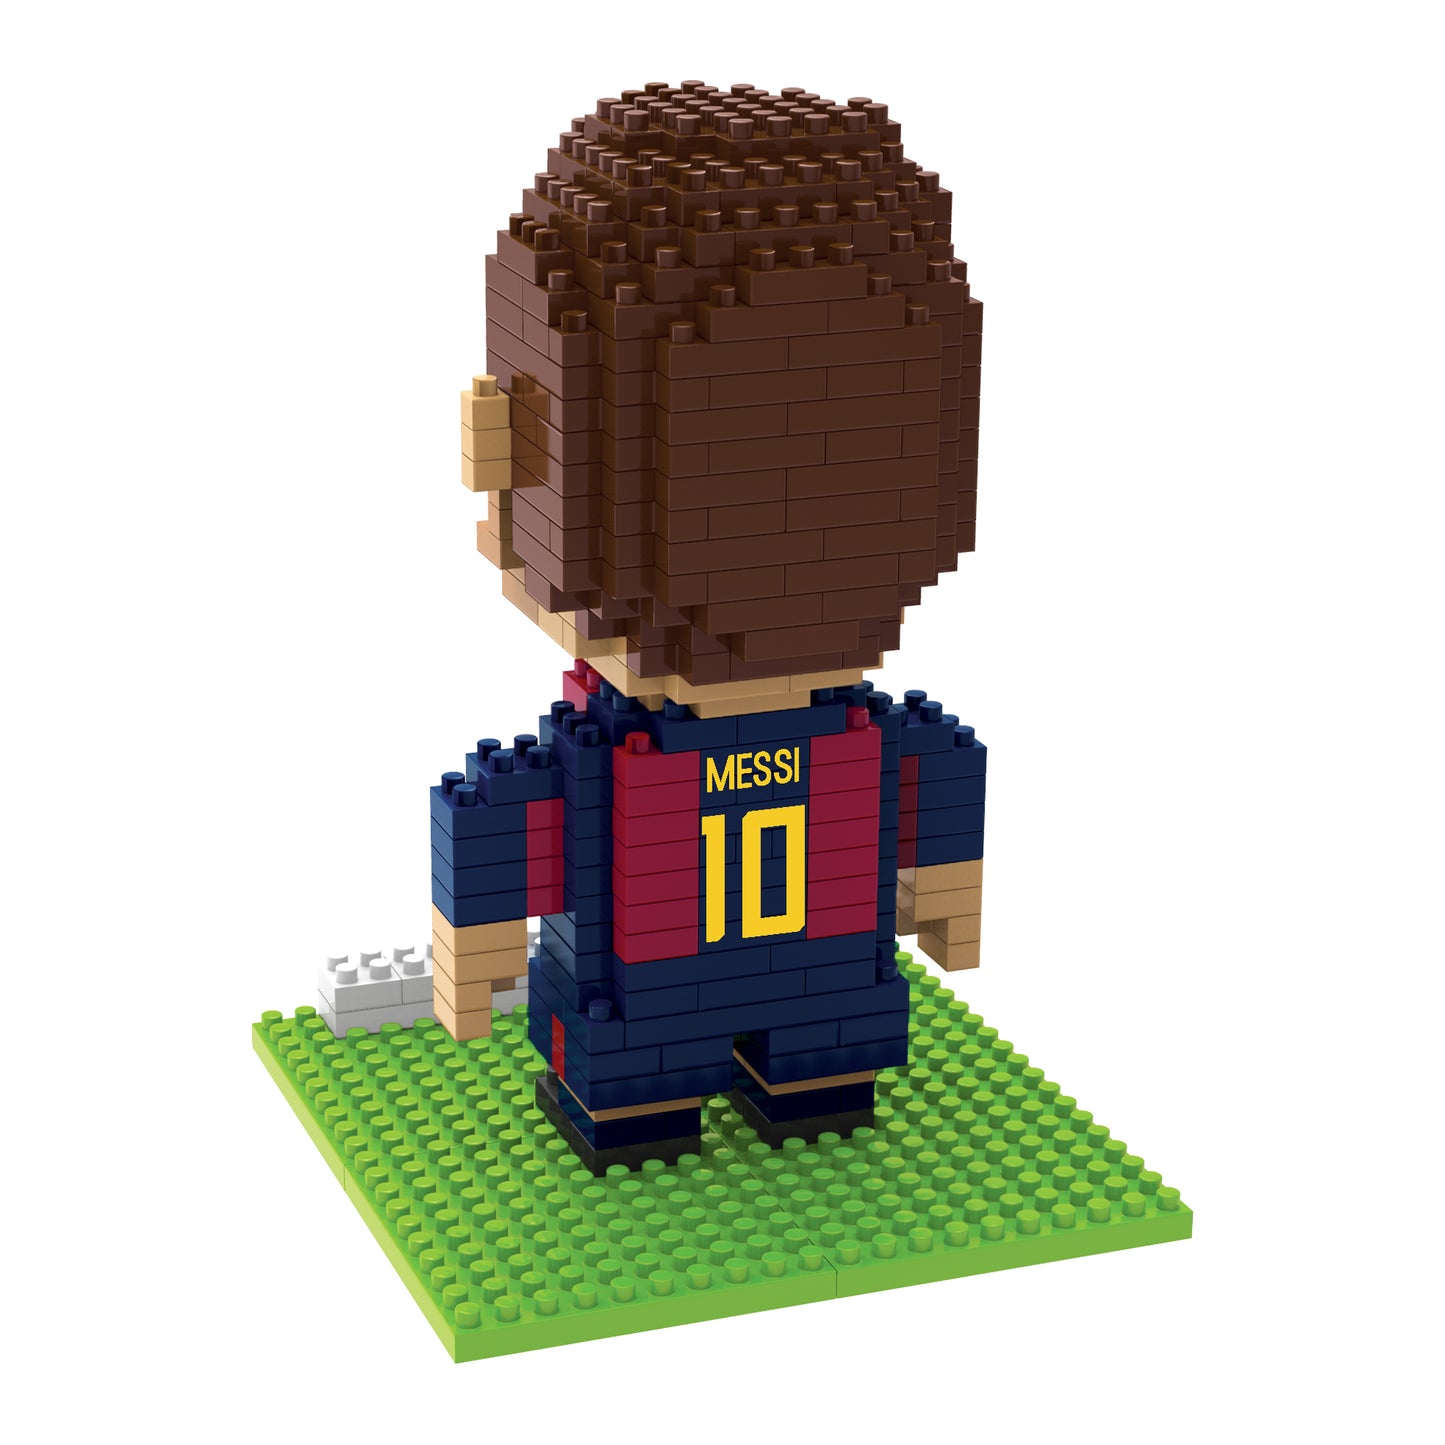 BRXLZ FC Barcelona Player - Lionel Messi #10 - 3D Construction Toy